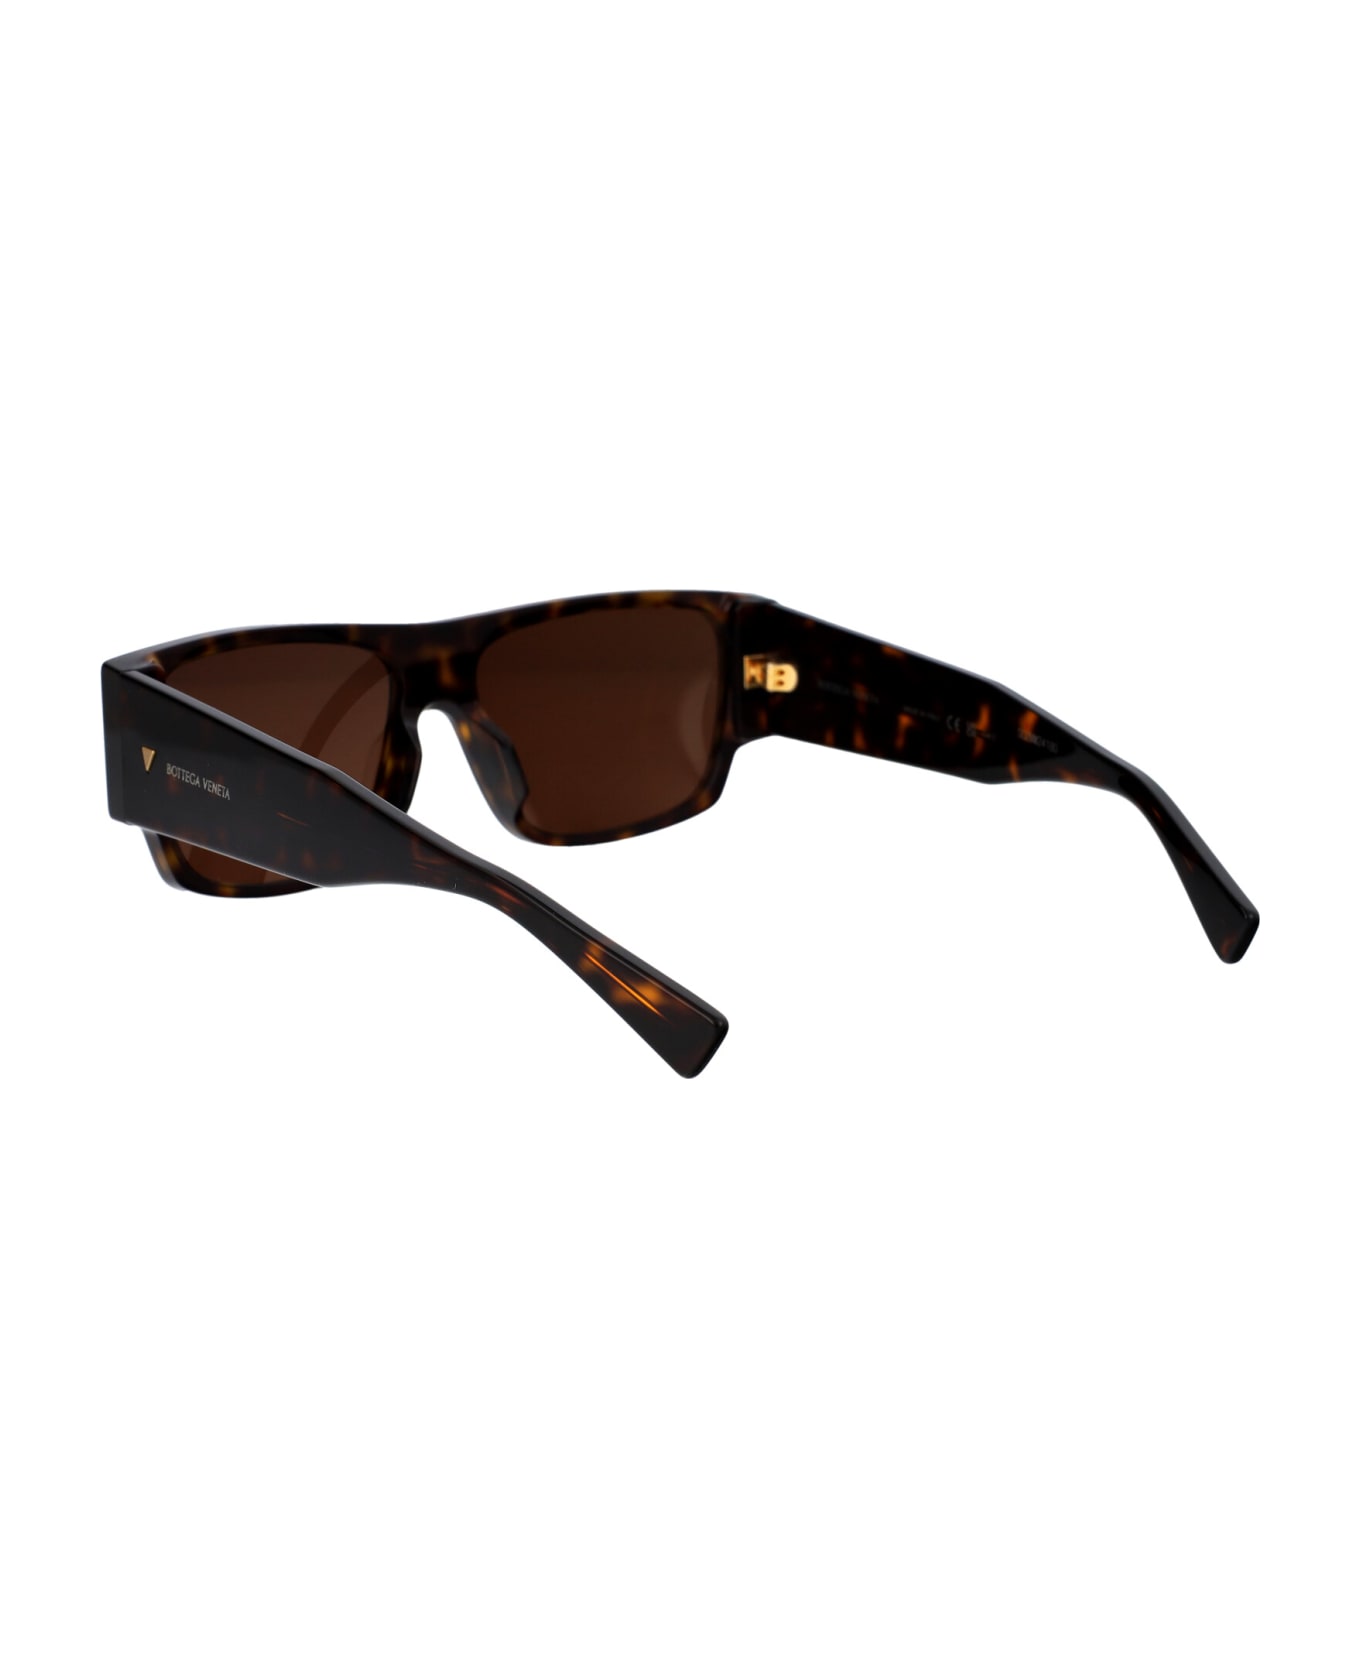 Bottega Veneta Eyewear Bv1286s Sunglasses - 002 HAVANA HAVANA BROWN